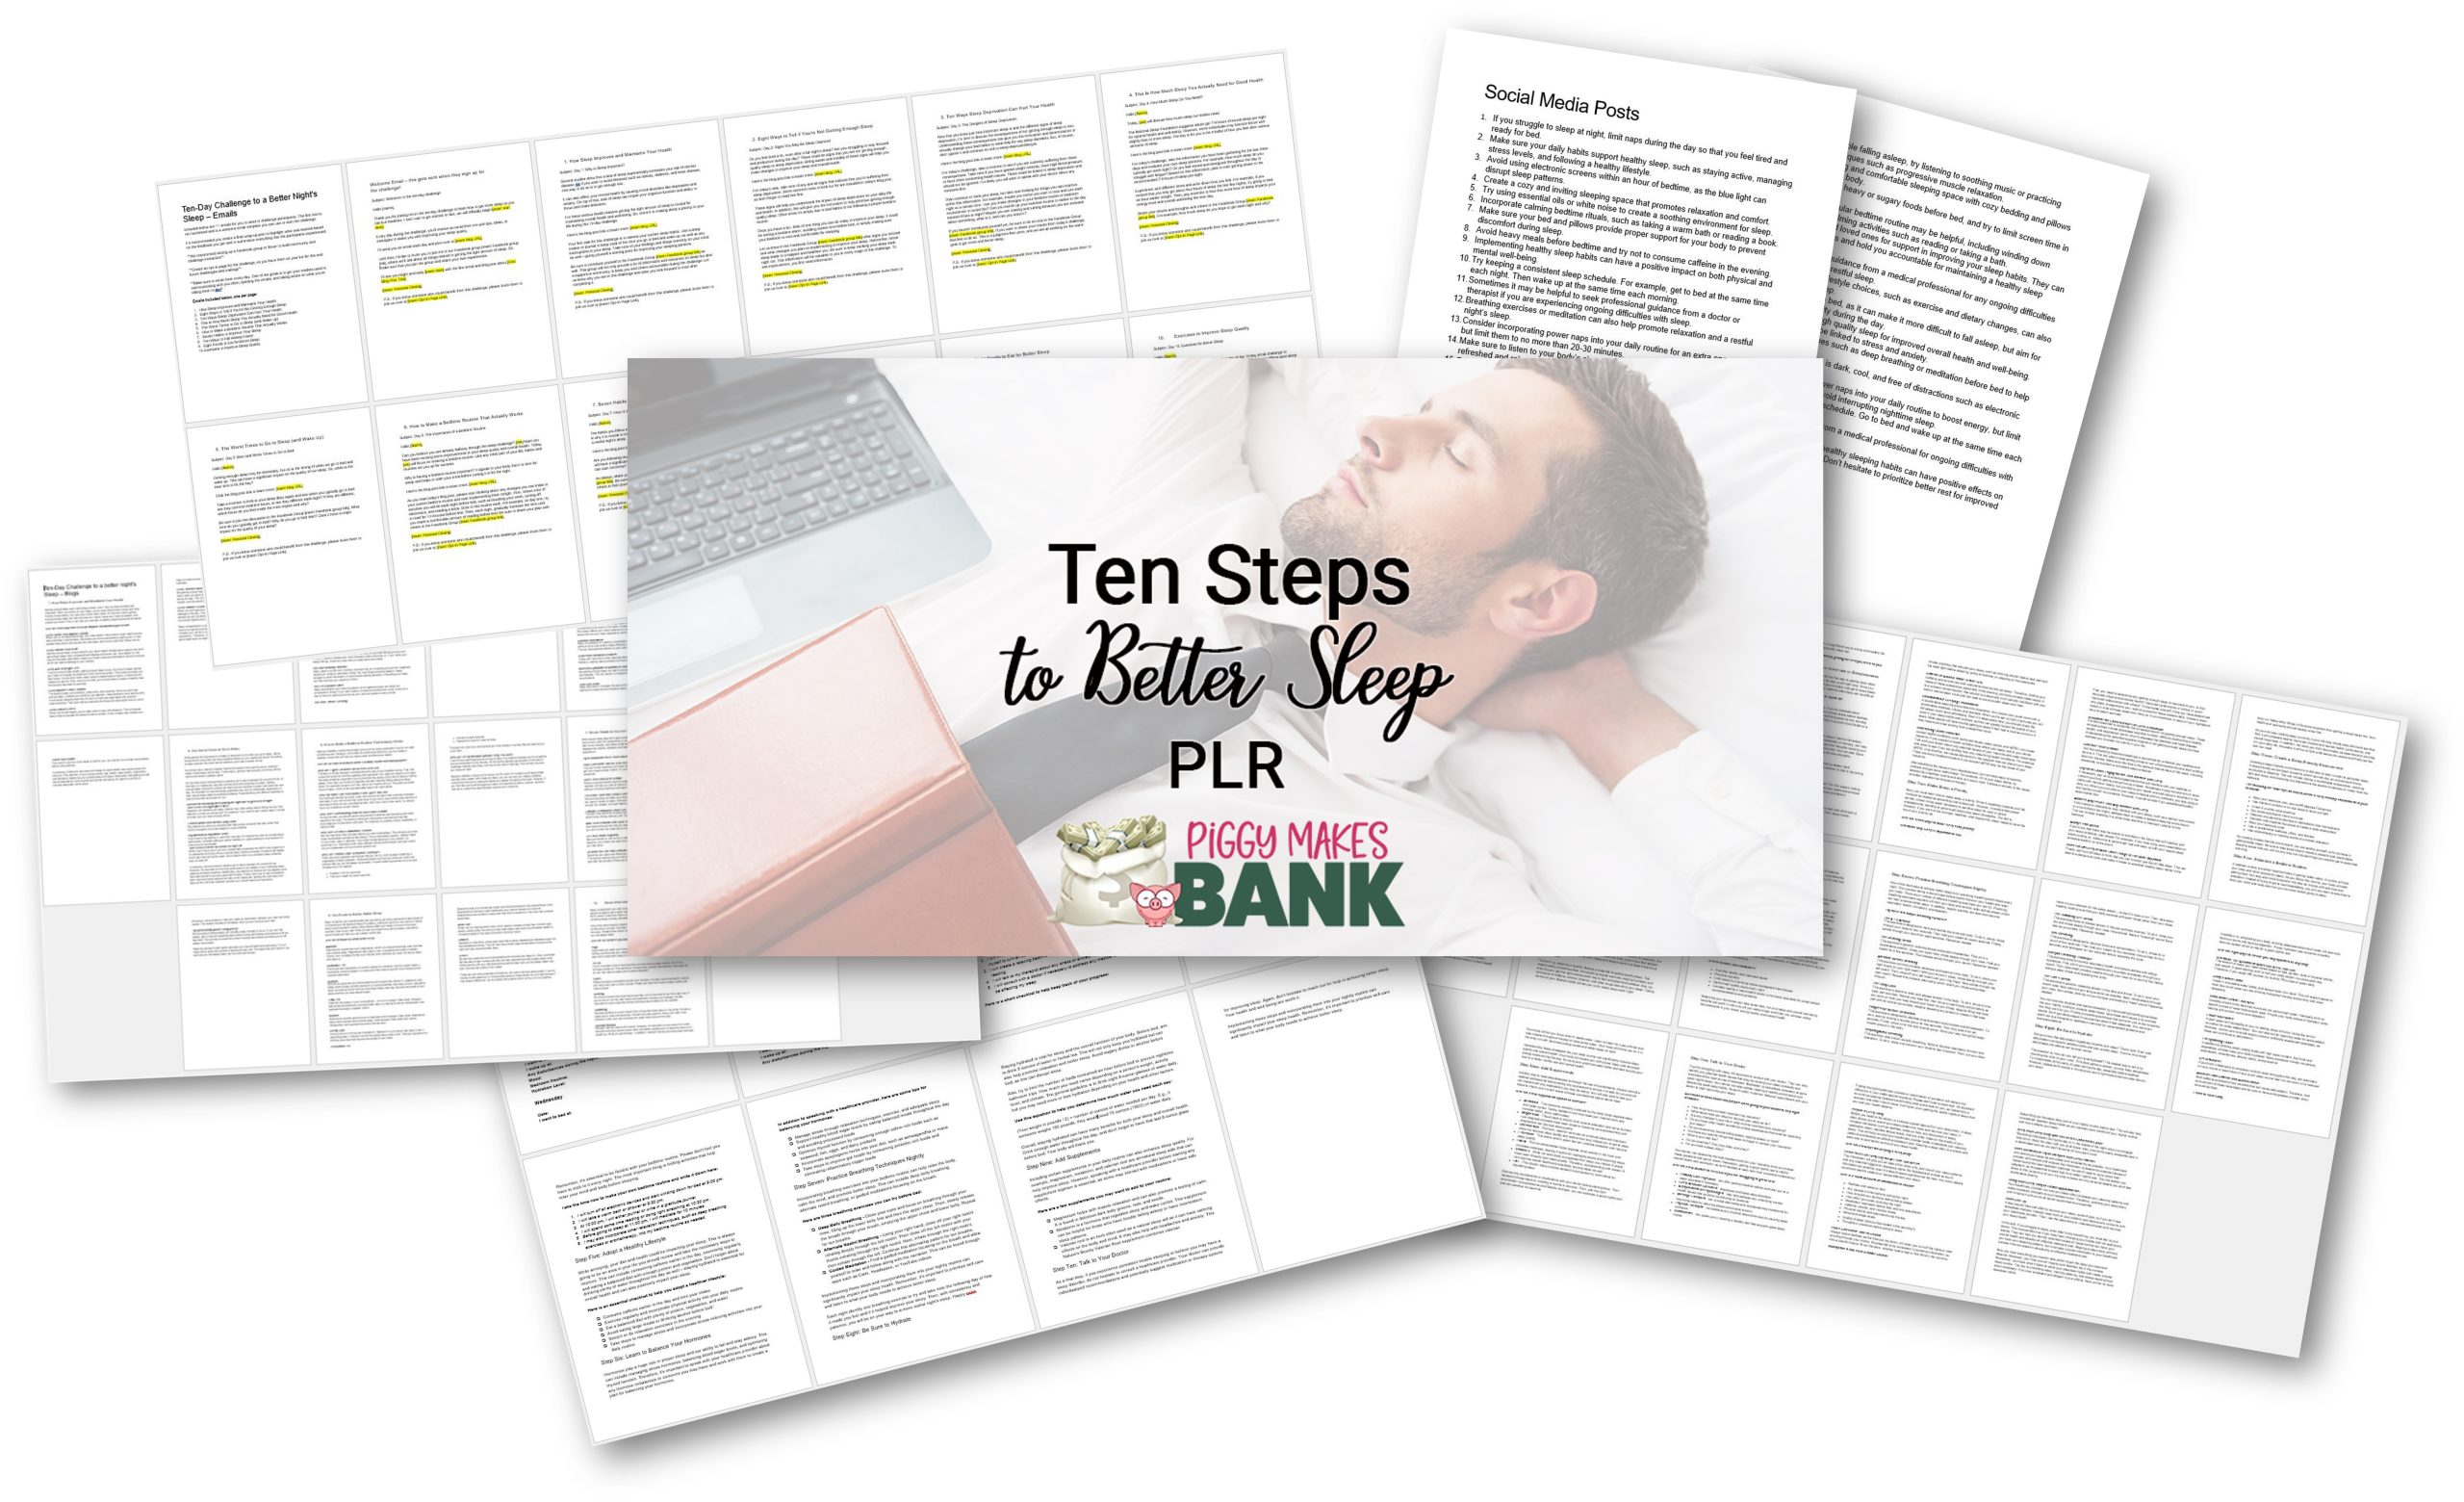 Ten Steps to Better Sleep PLR